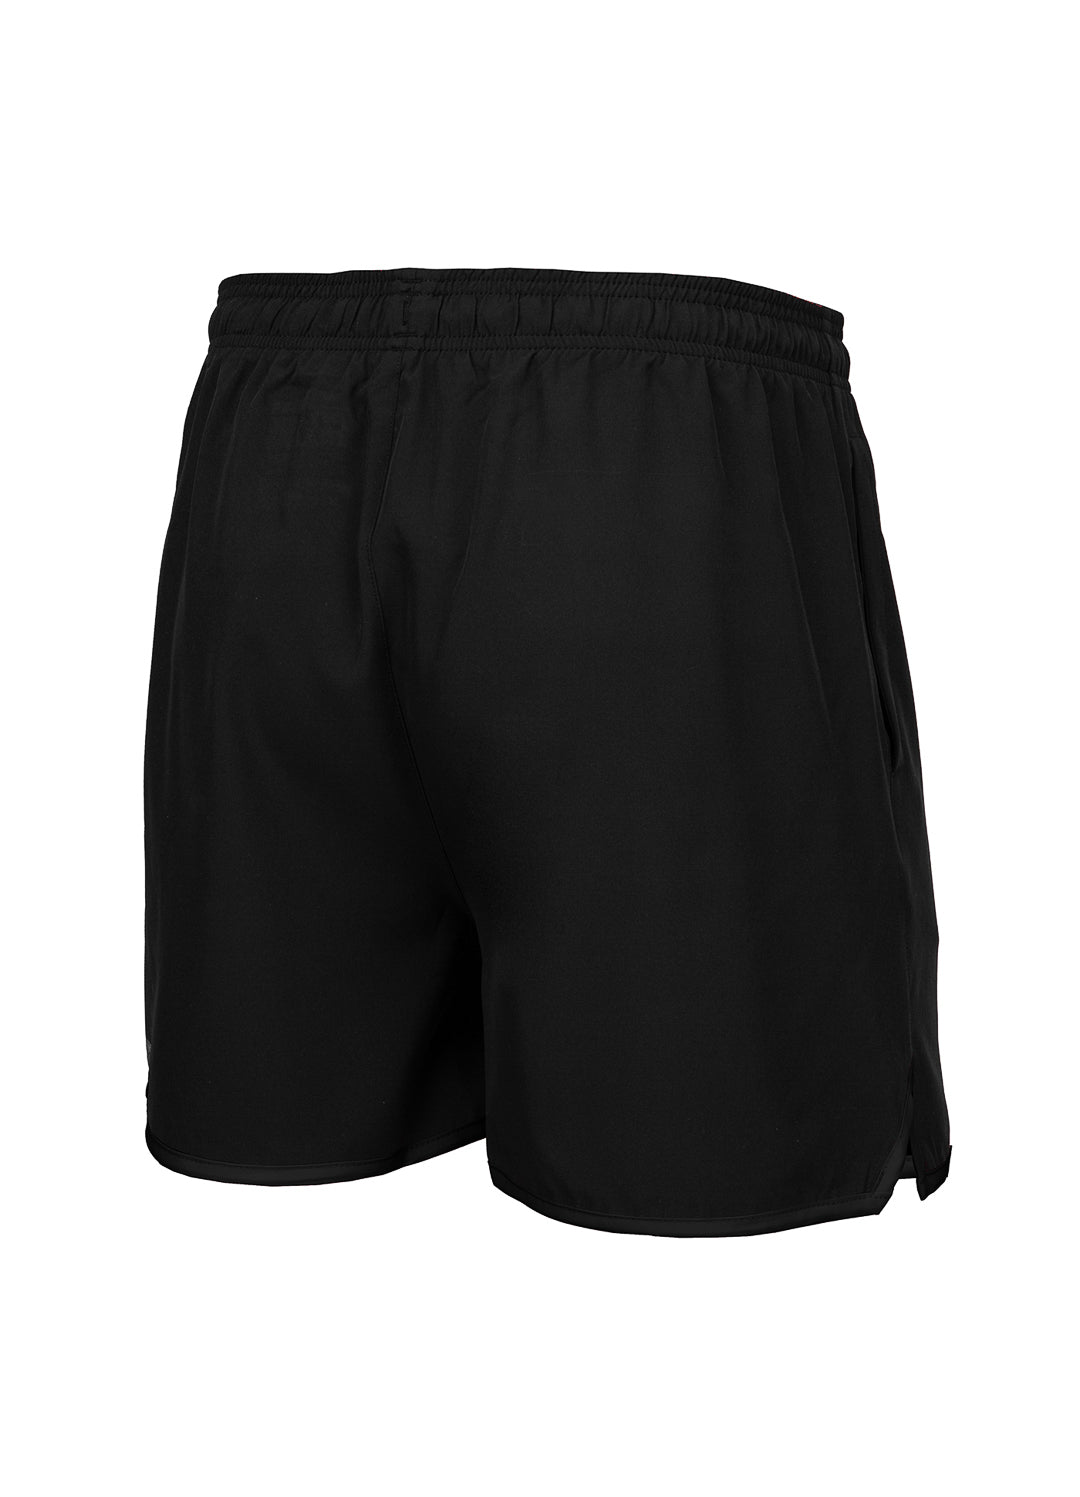 SMALL LOGO 2 Performance Black Shorts